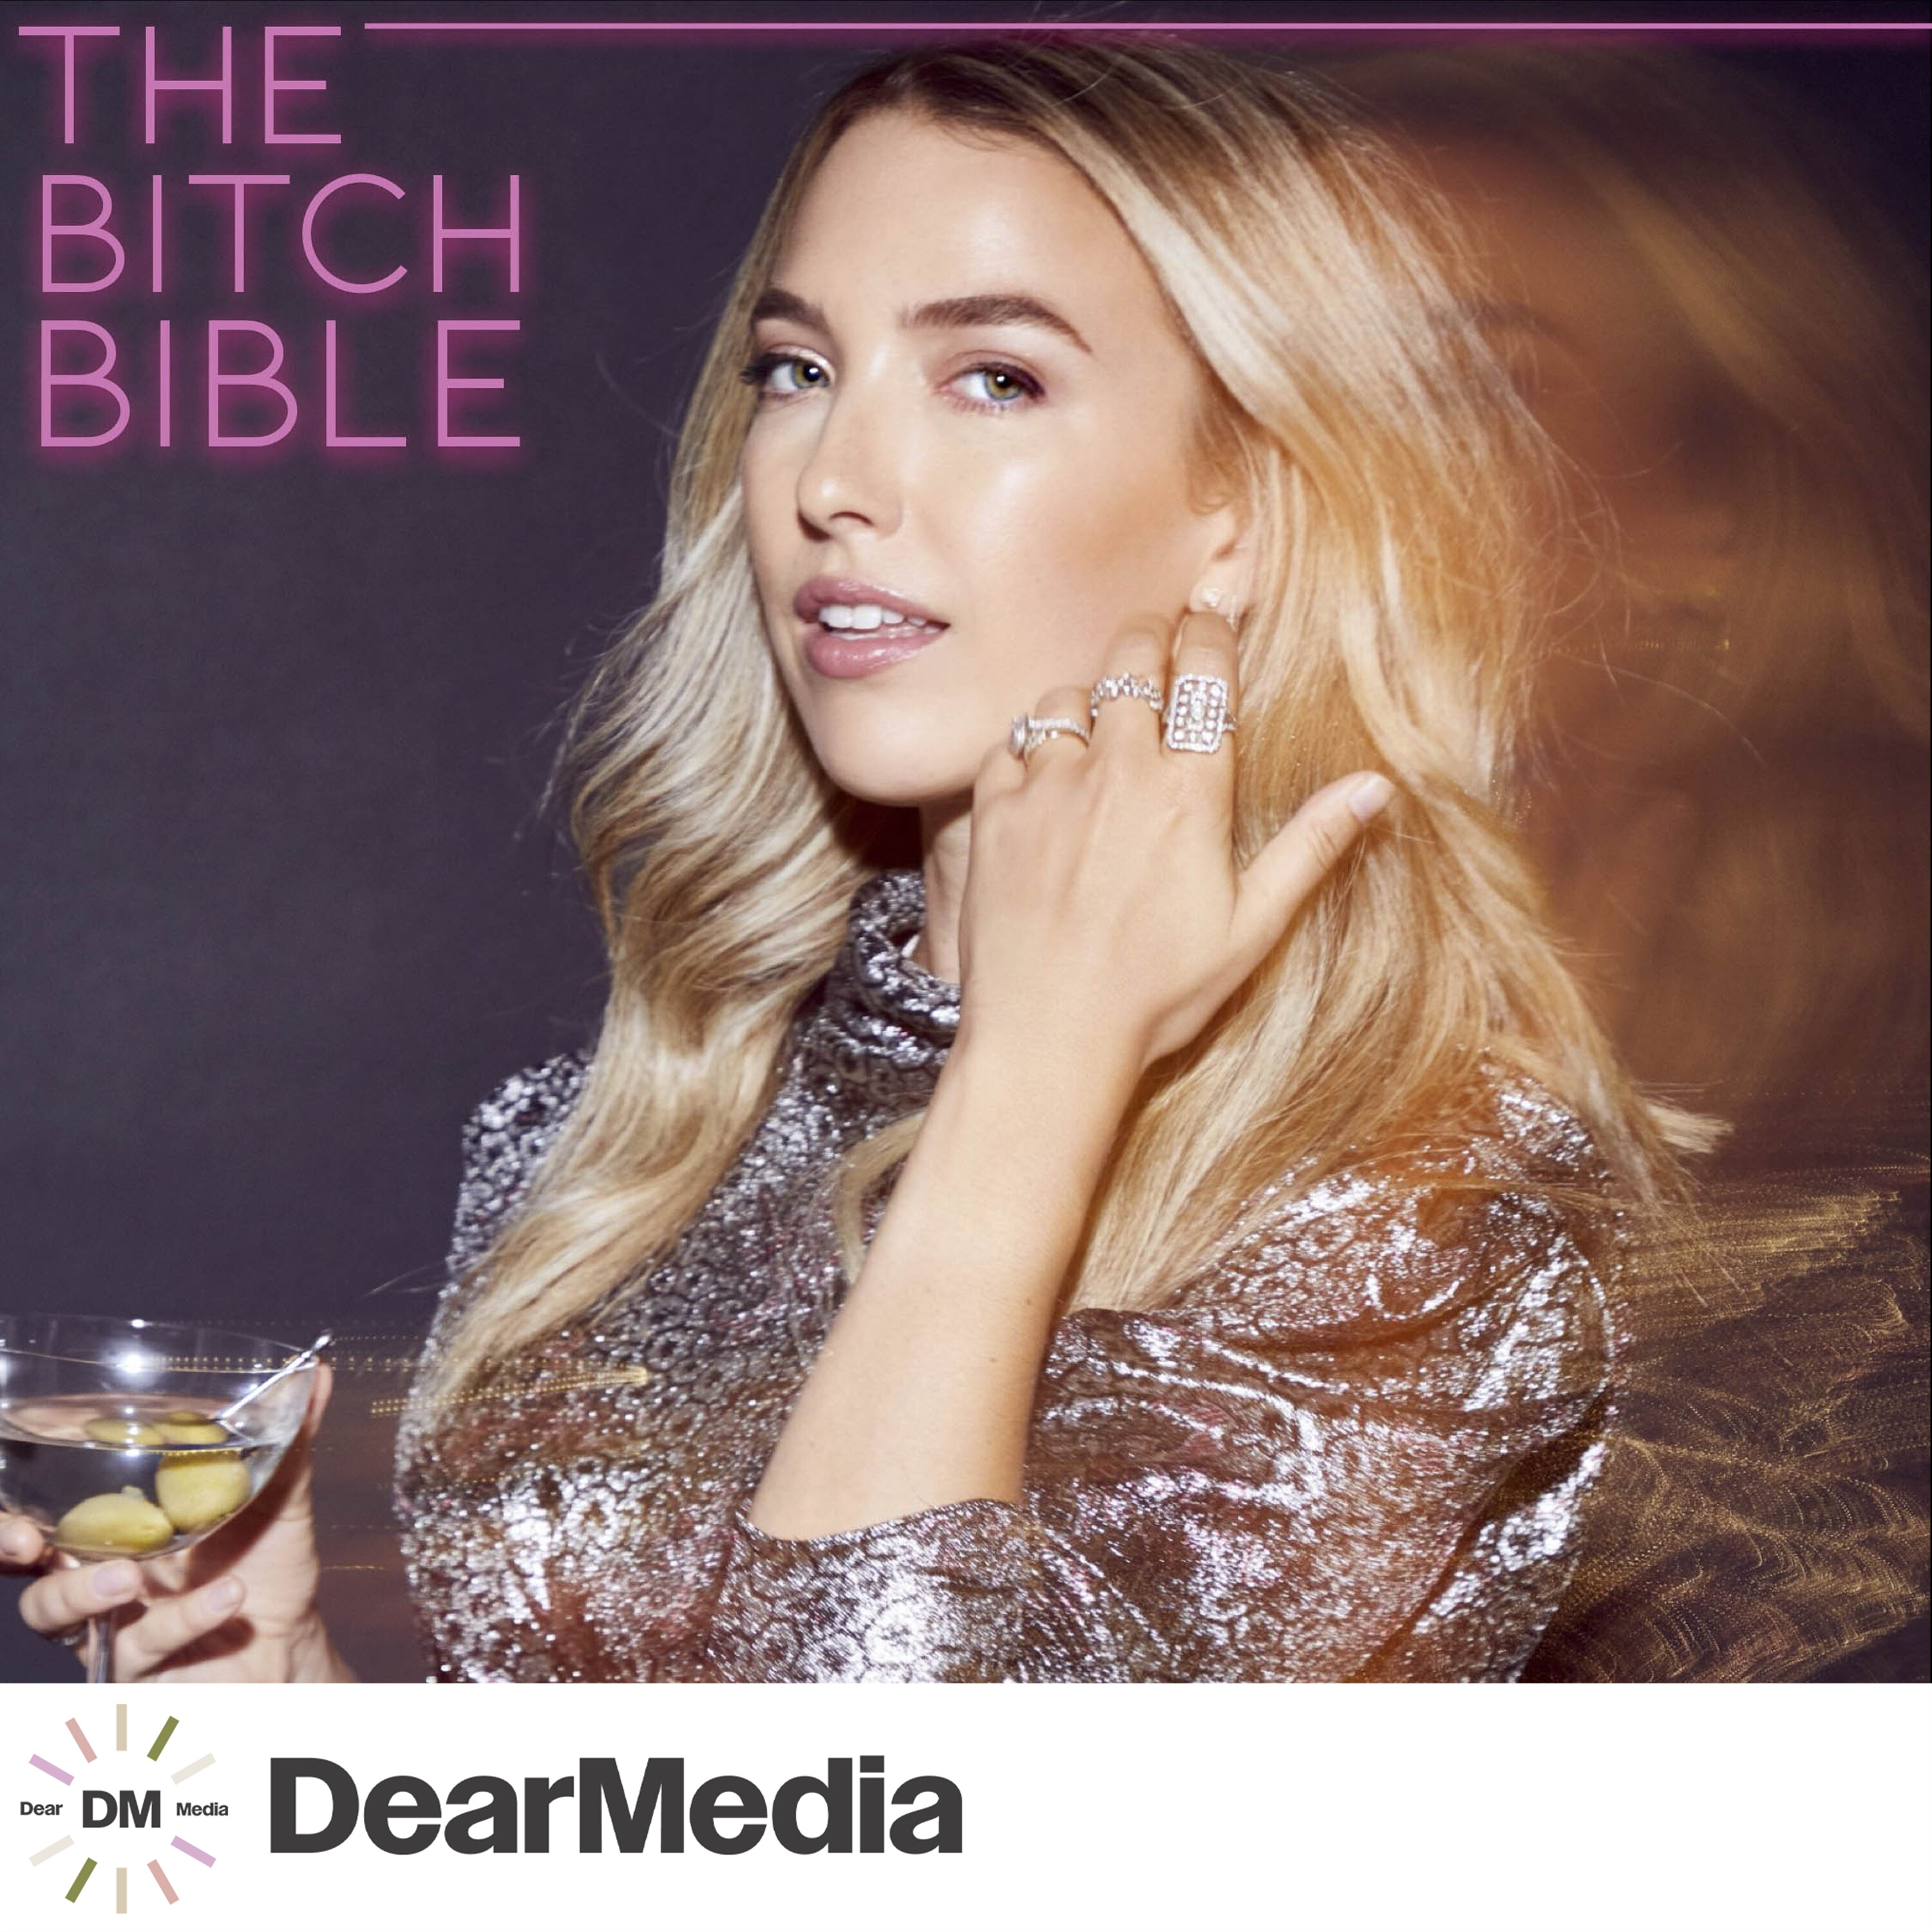 The Bitch Bible